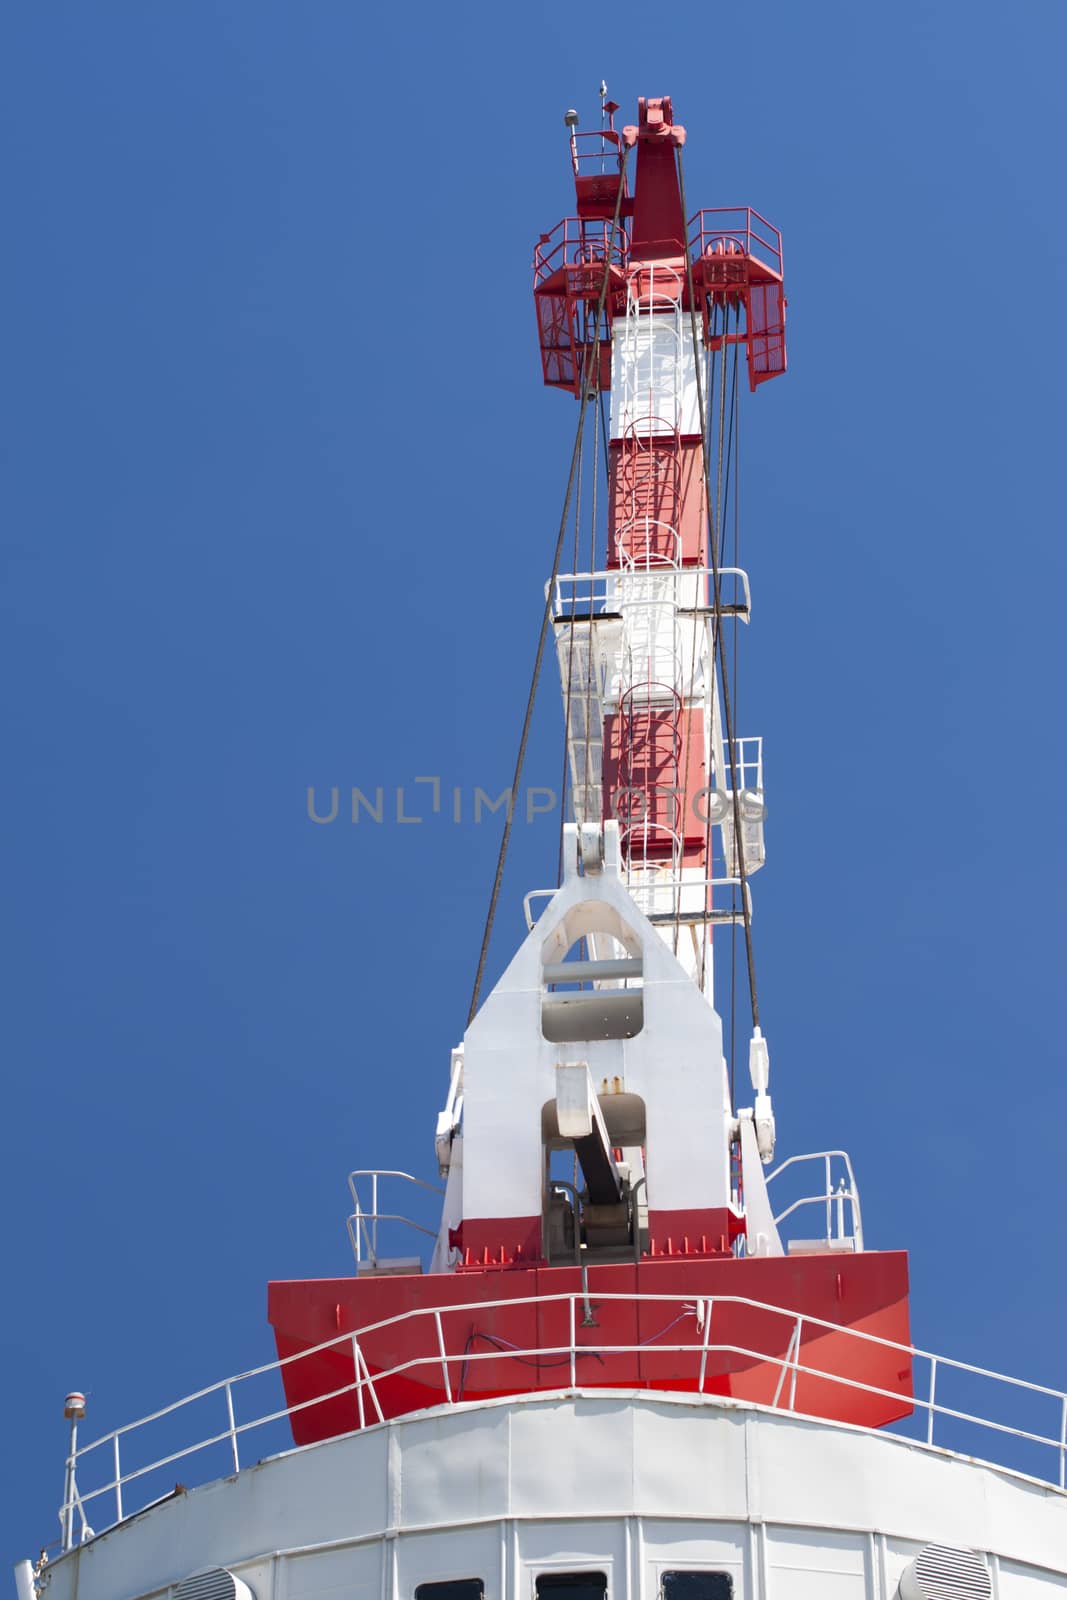 Harbour crane in port